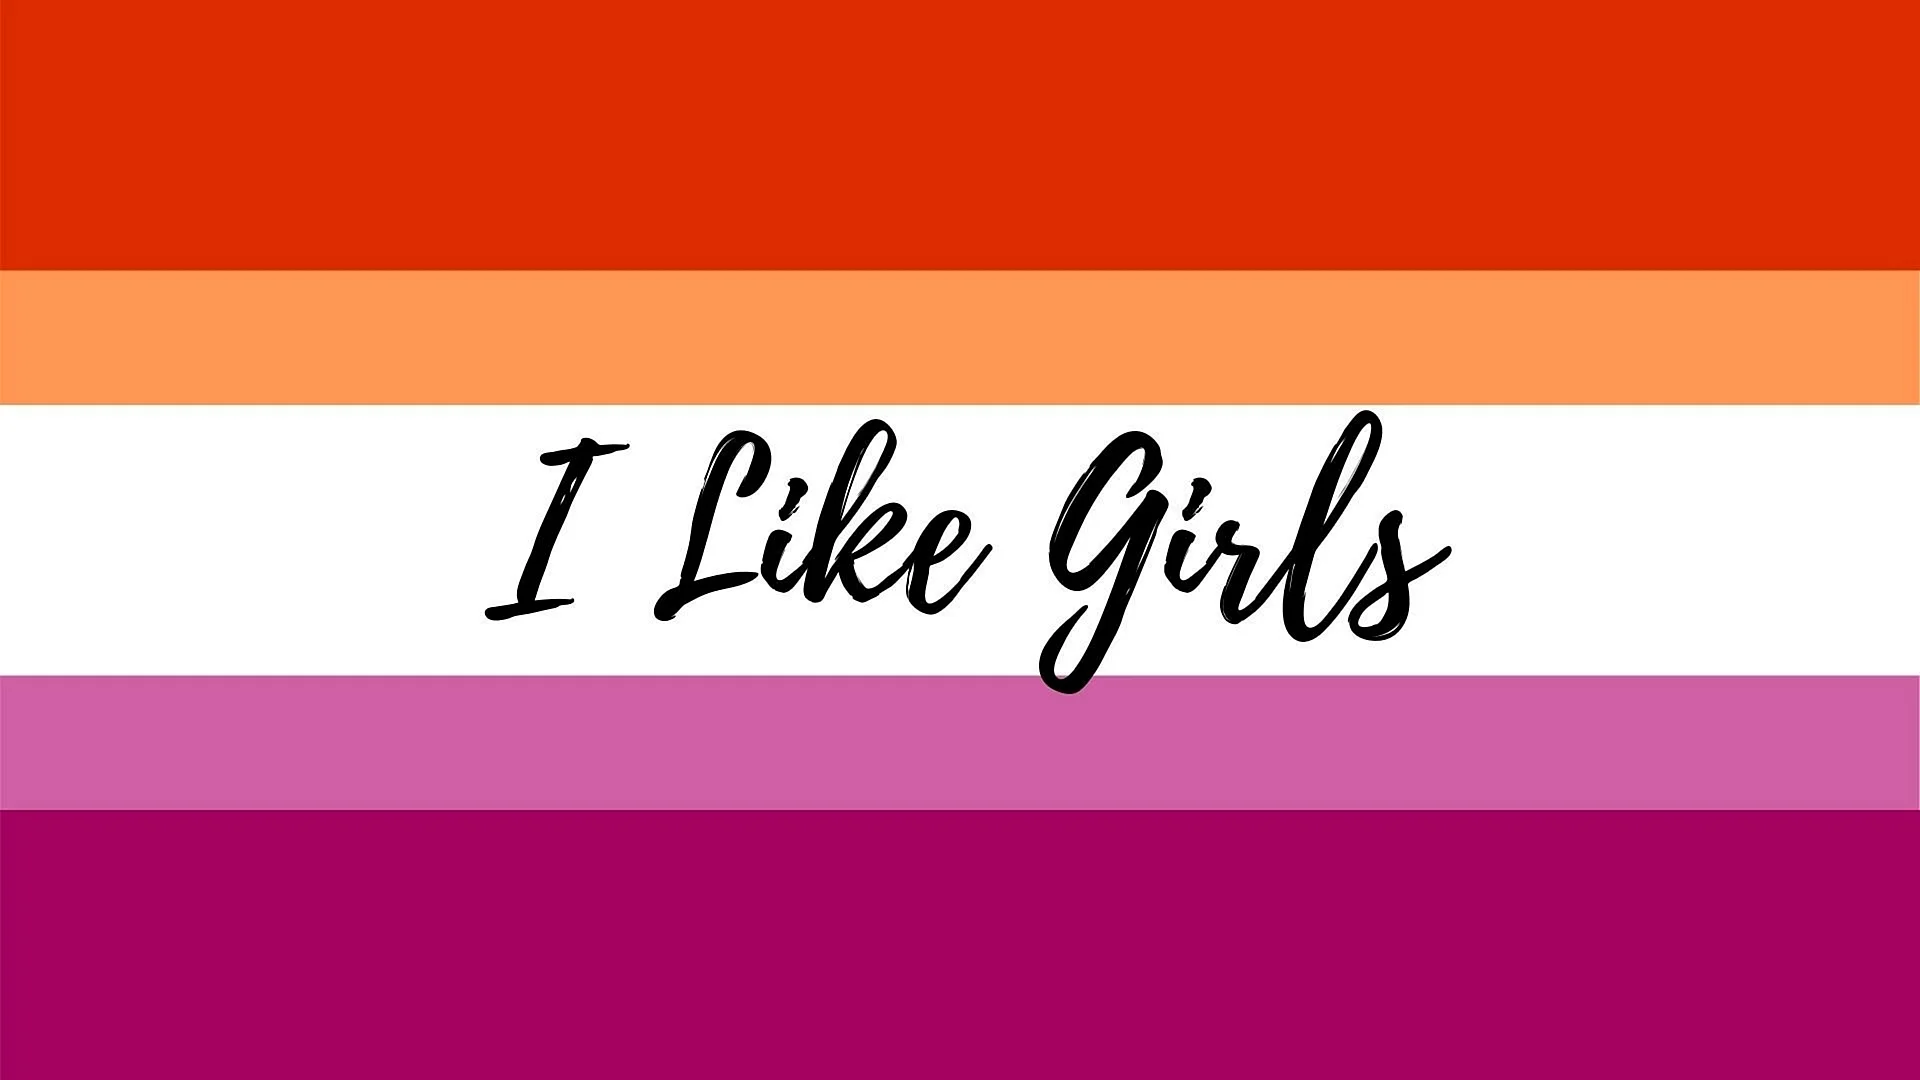 Lesbian Flag Wallpaper